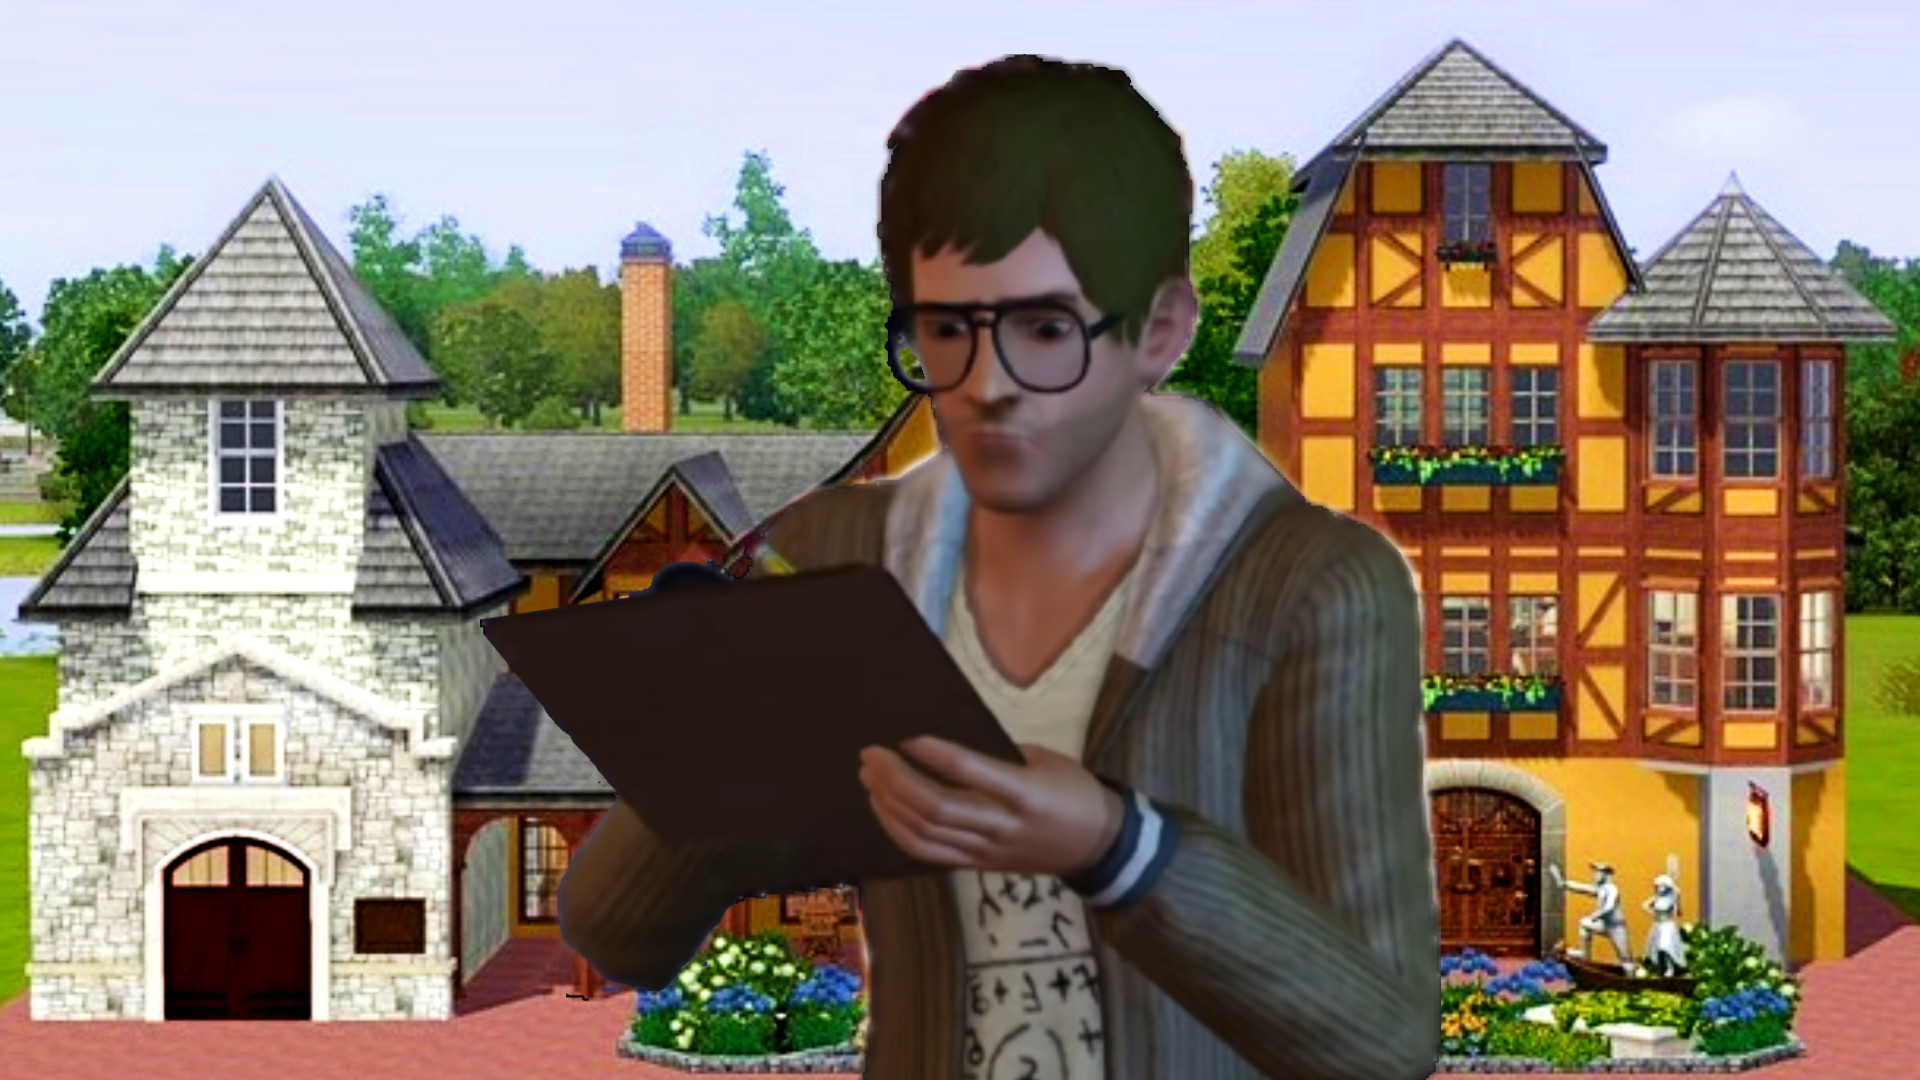 The Sims 3 Disney World community build showcases the life sim's magic